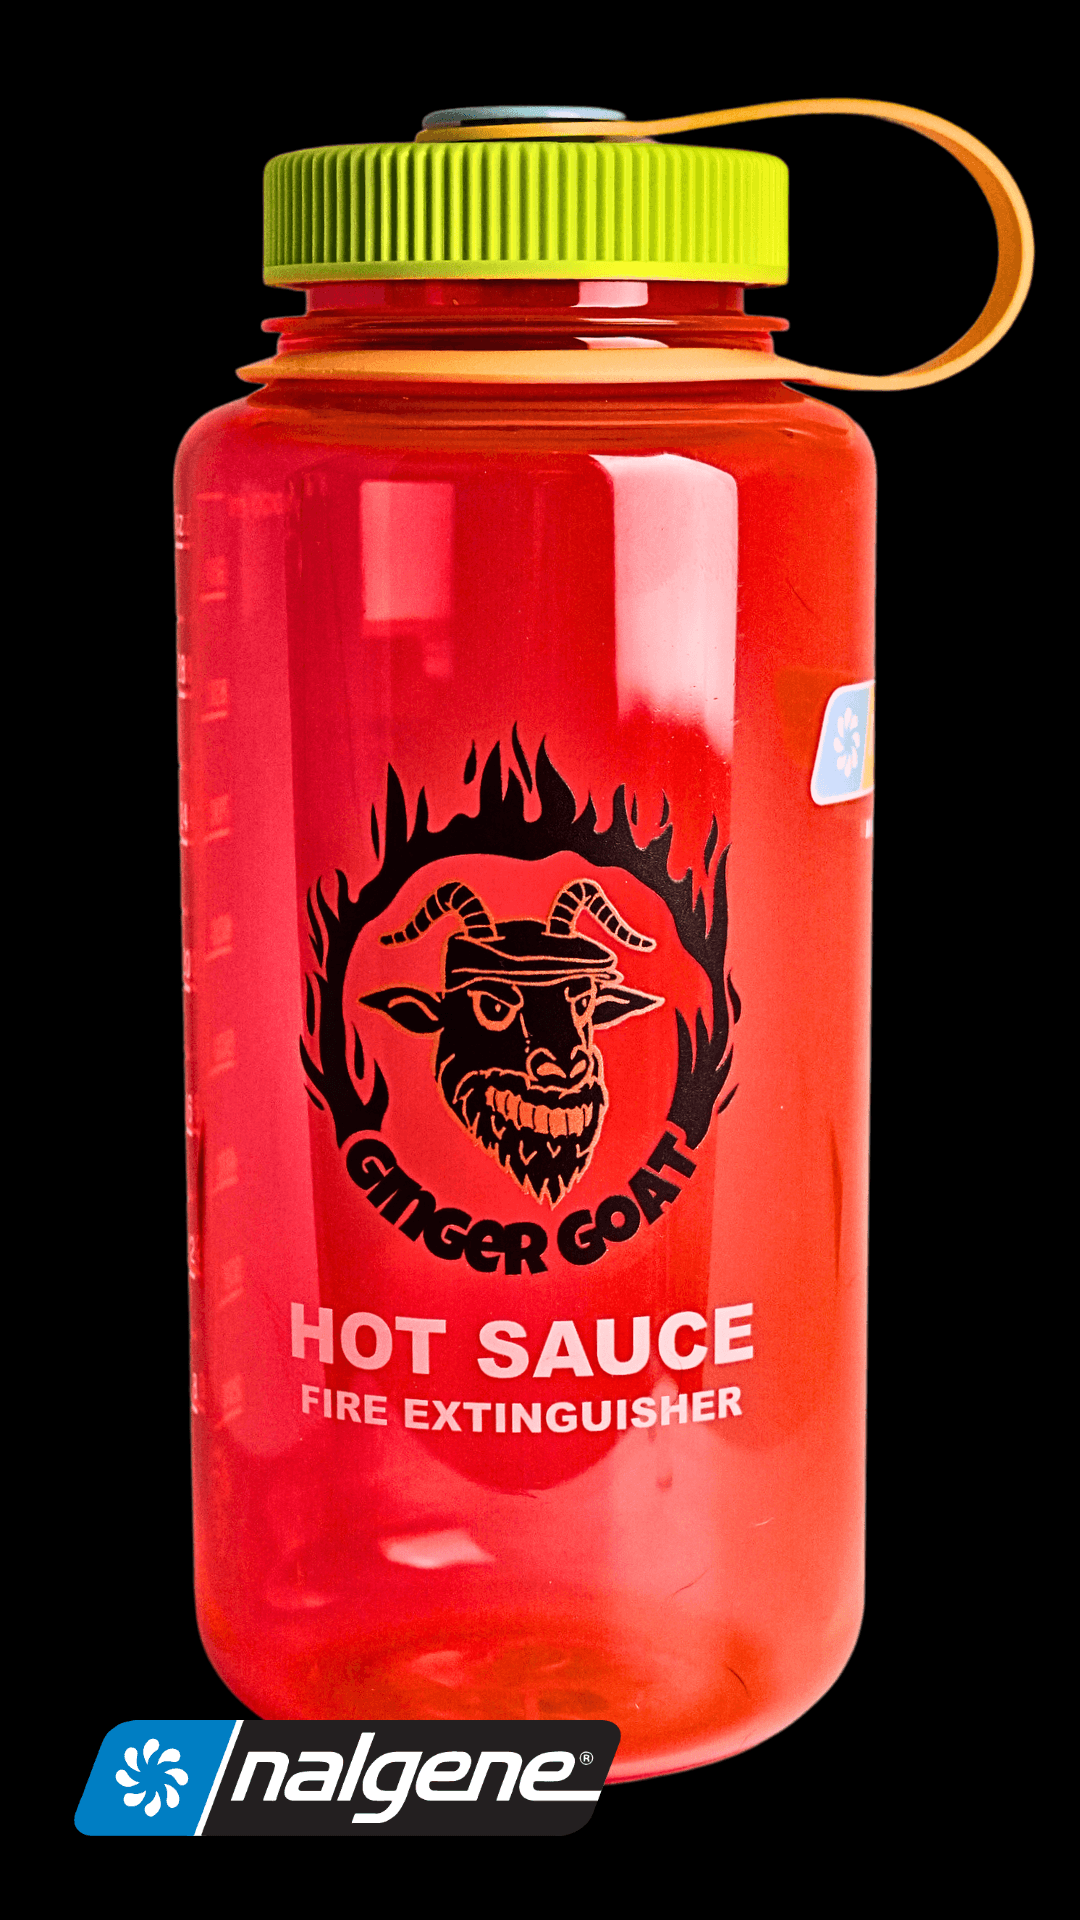 Hot Sauce Fire Extinguisher - Ginger Goat